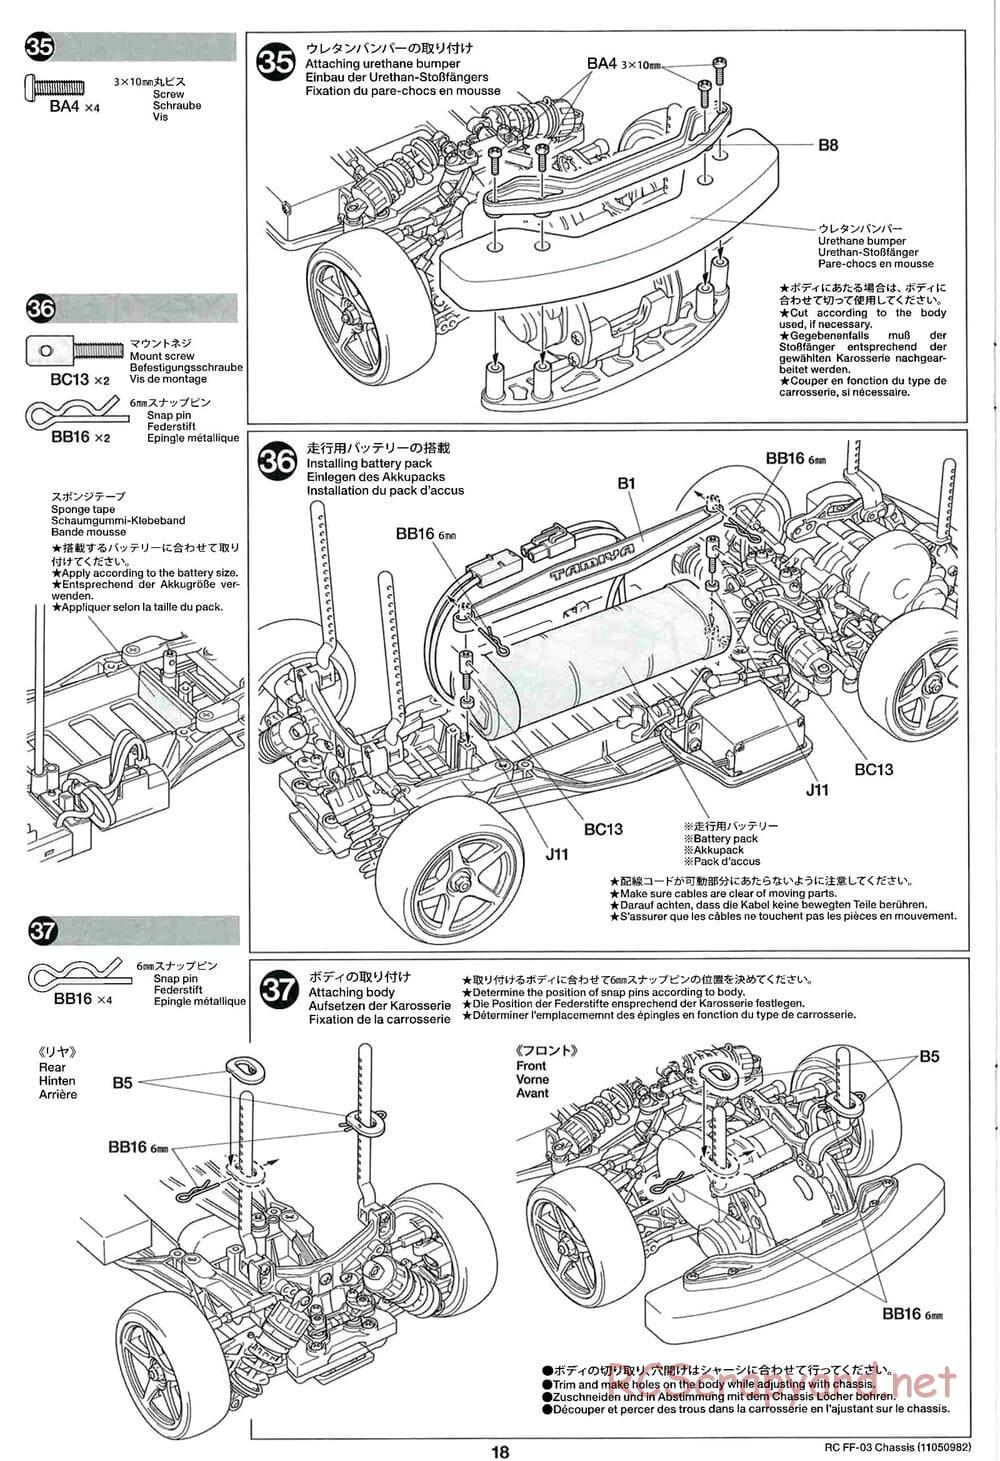 Tamiya - FF-03 Chassis - Manual - Page 18